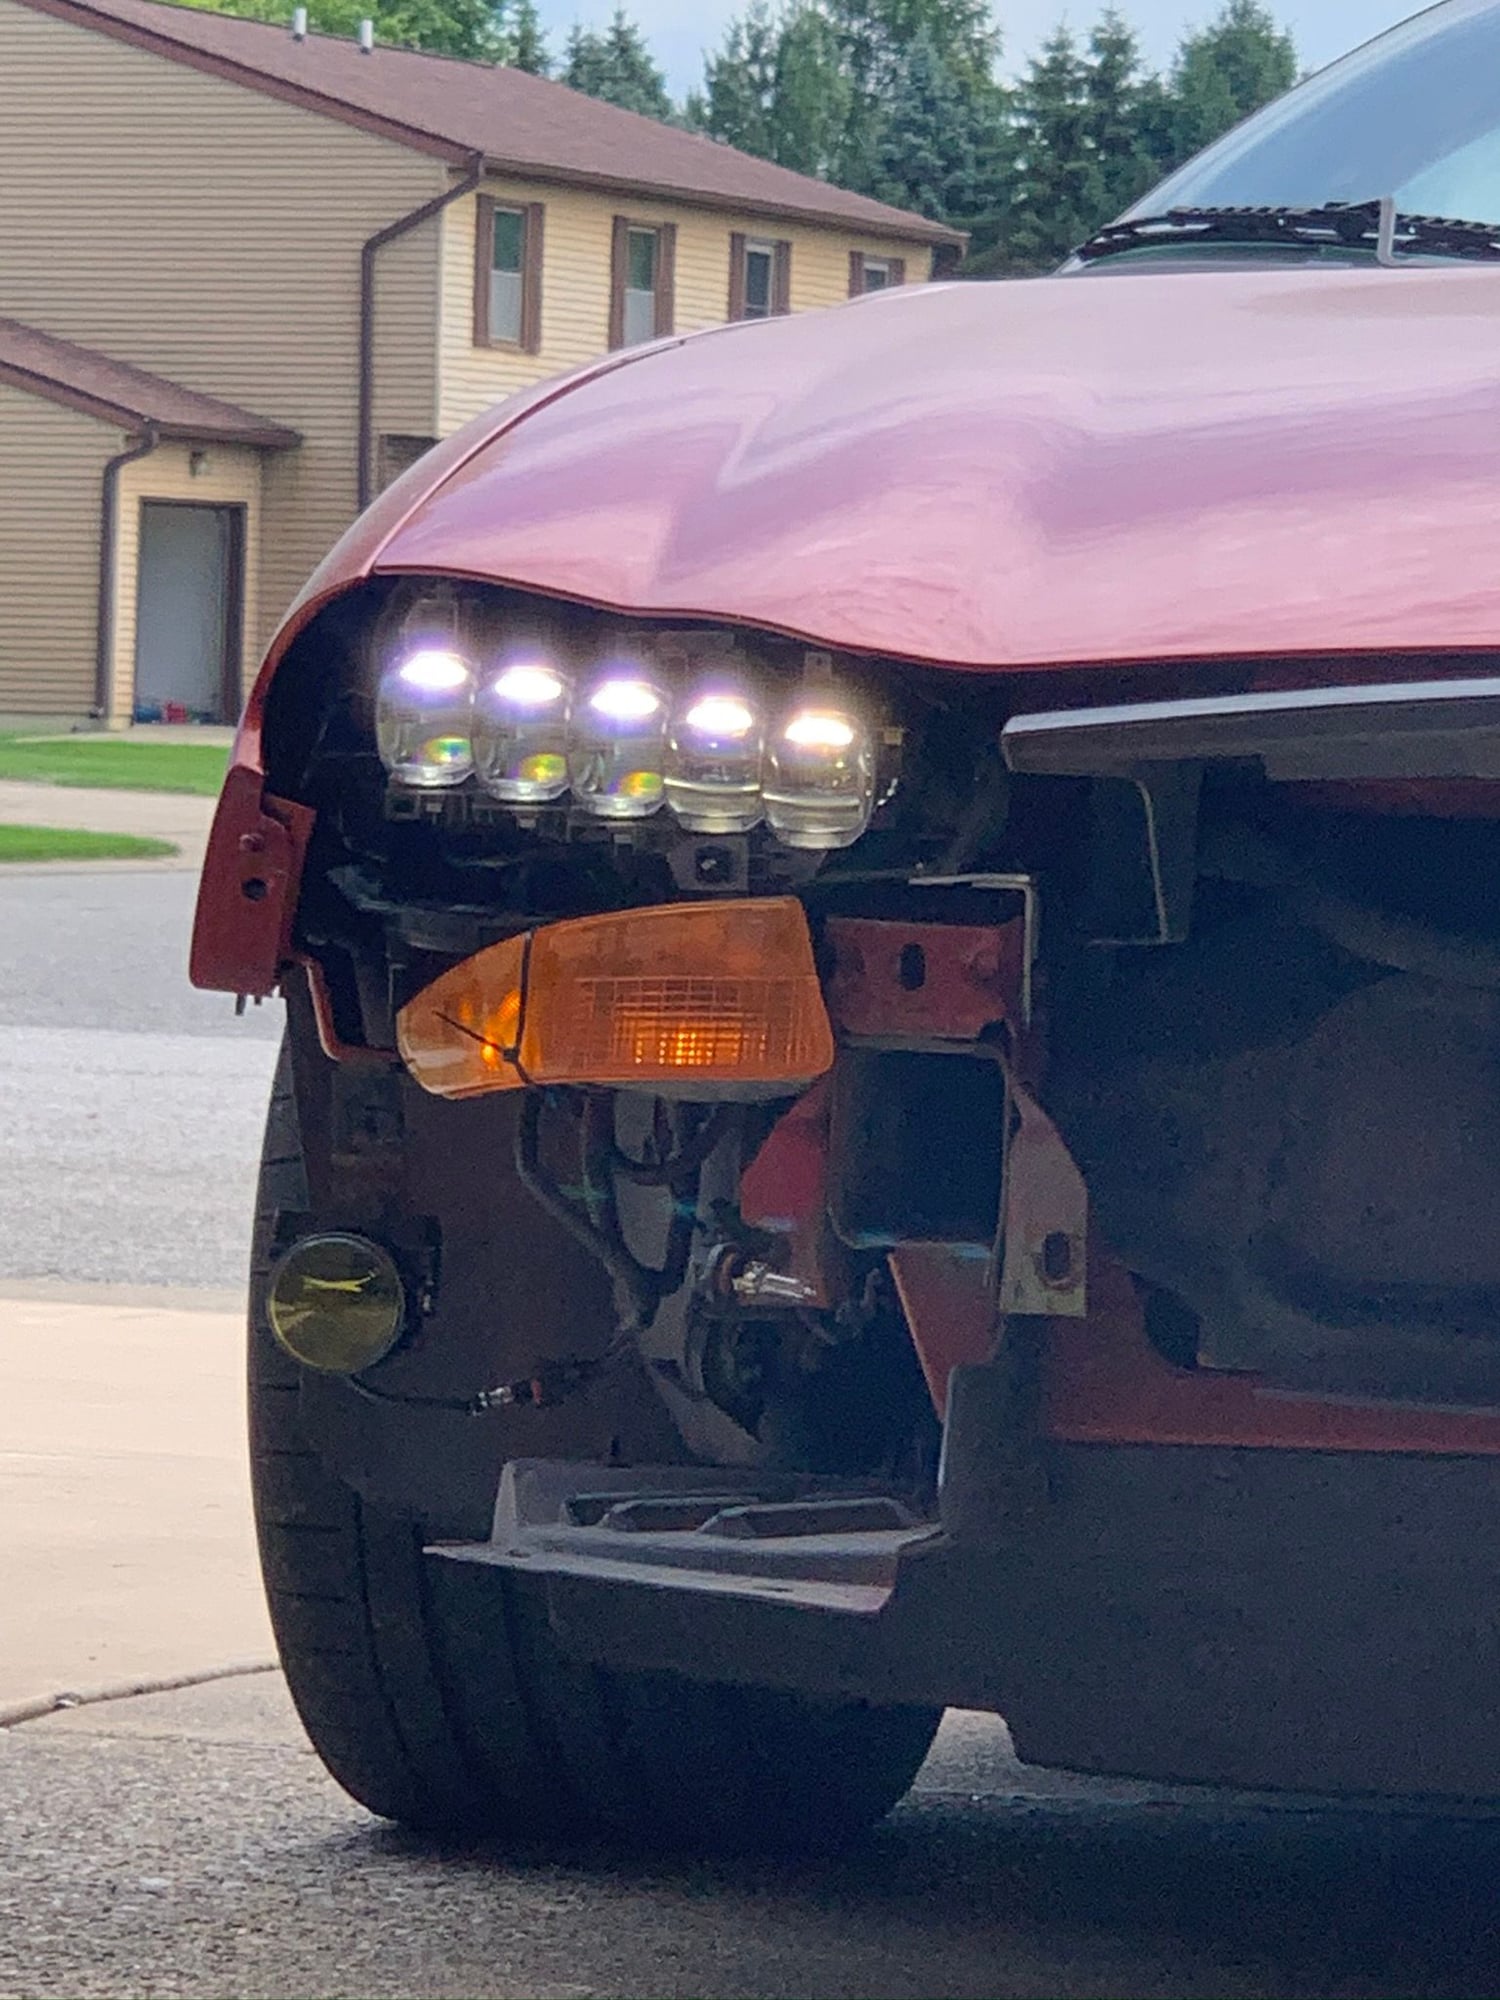 Lights - Jewel eye 98-02 Camaro headlight project. - Used - Granger, IN 46530, United States